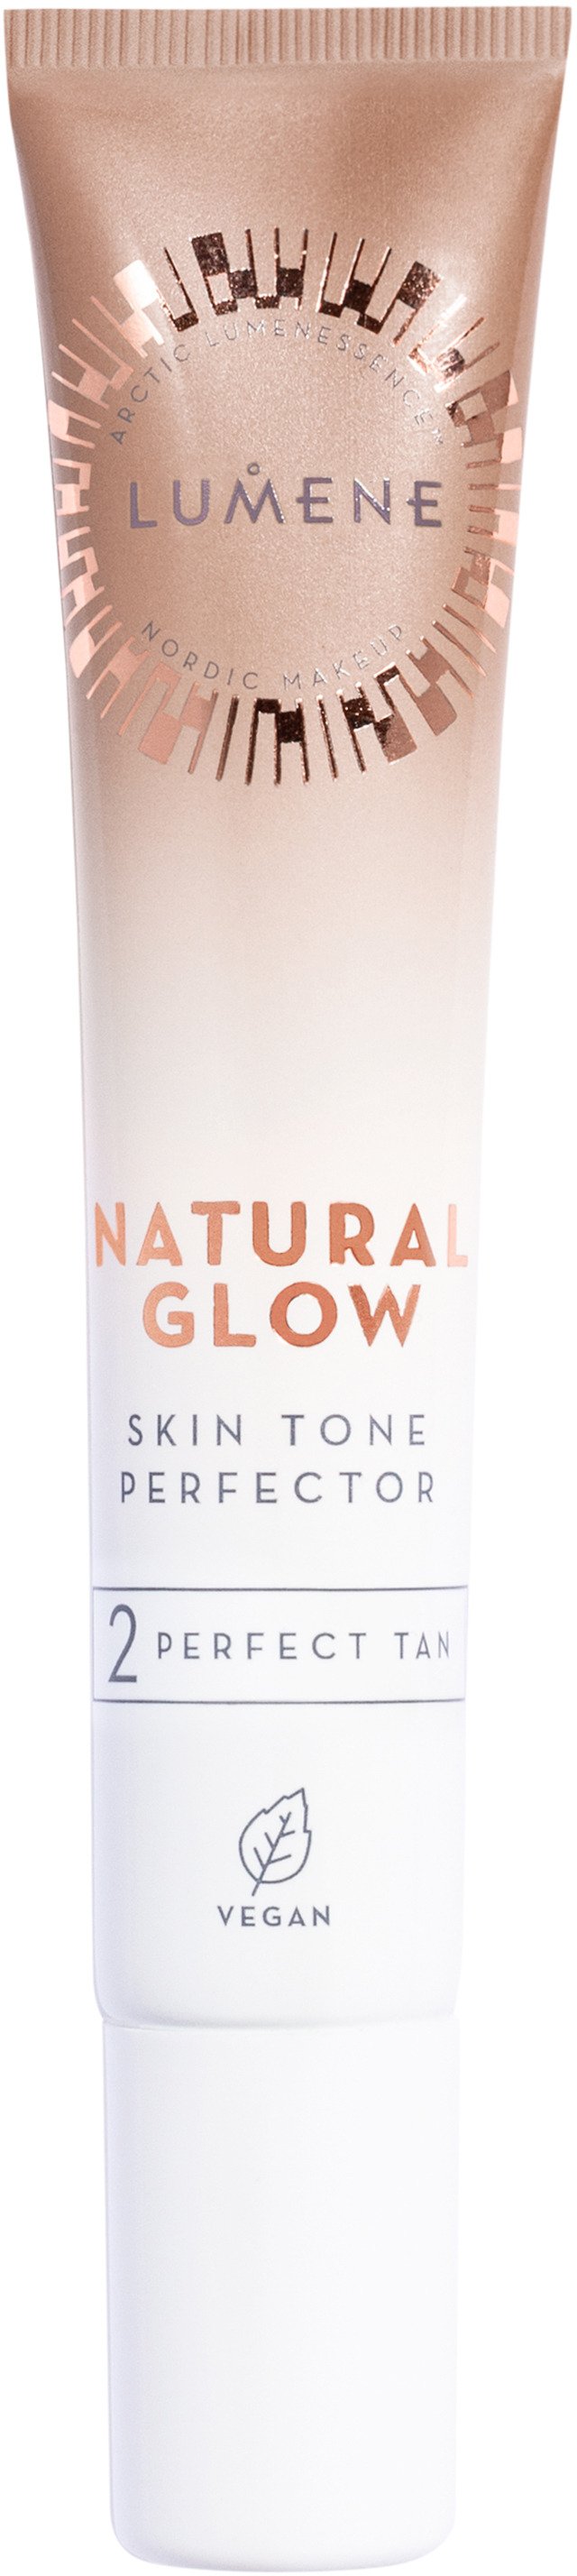 Lumene Natural Glow Skin Tone Perfector 2 Perfect 20 ml